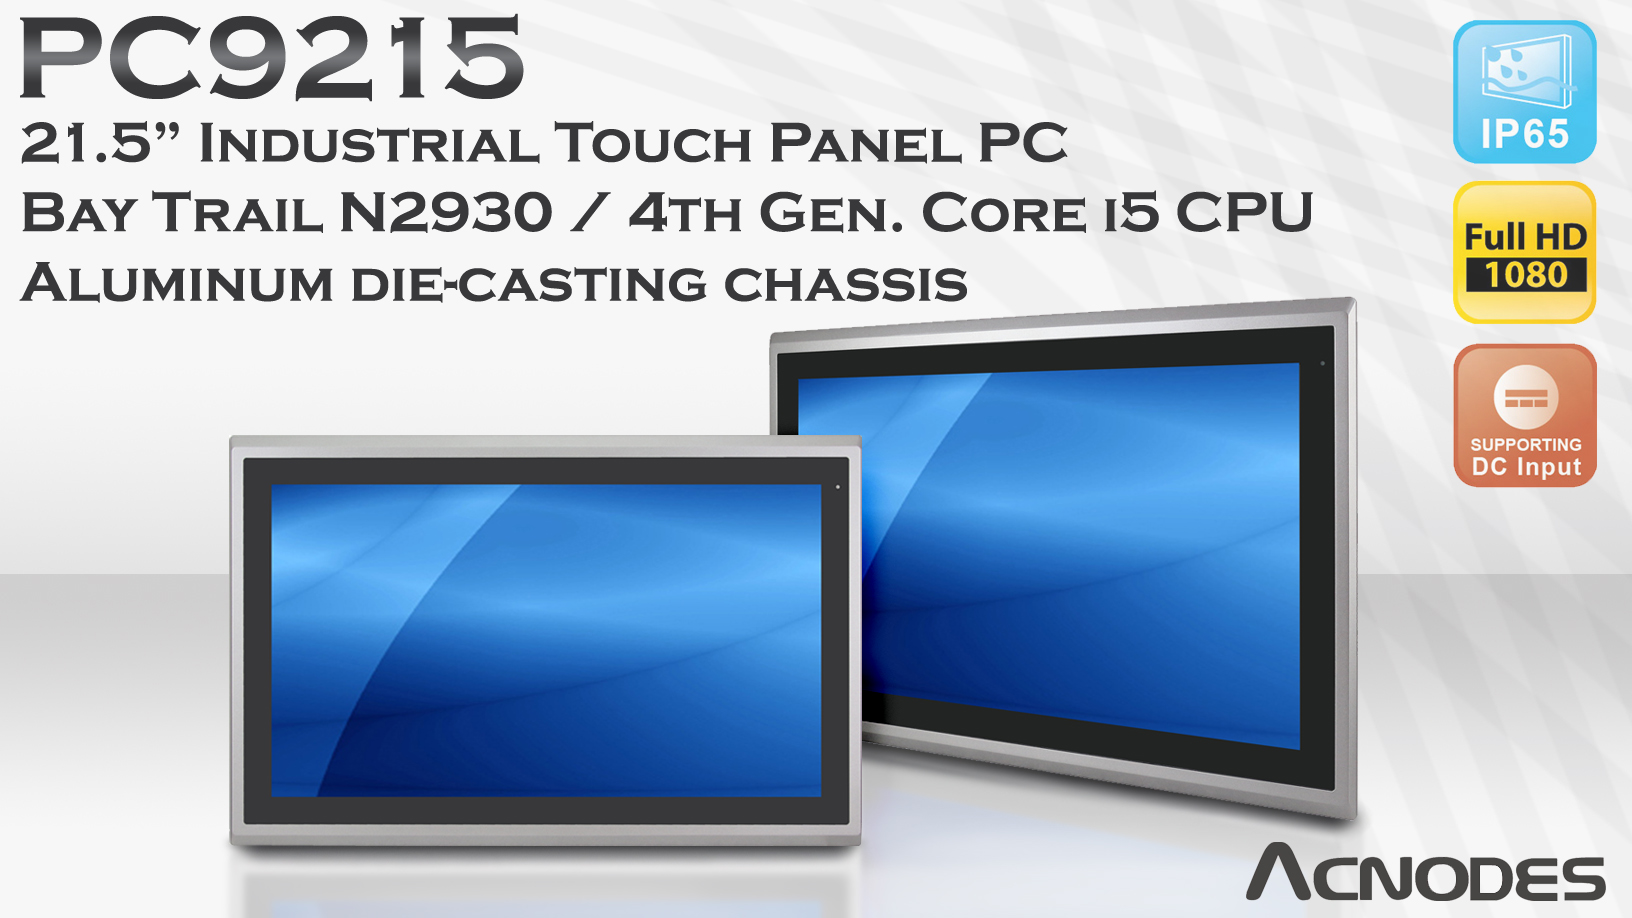 Panel PC PC9215